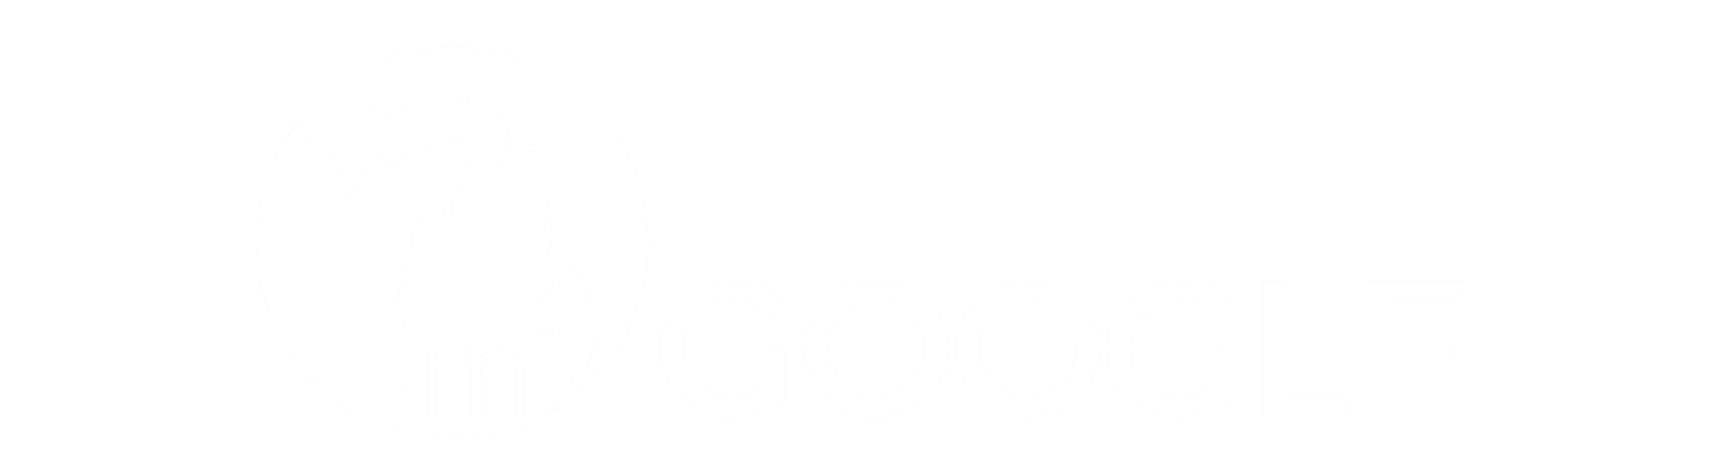 Site banner: 2023 Michigan Google Conference